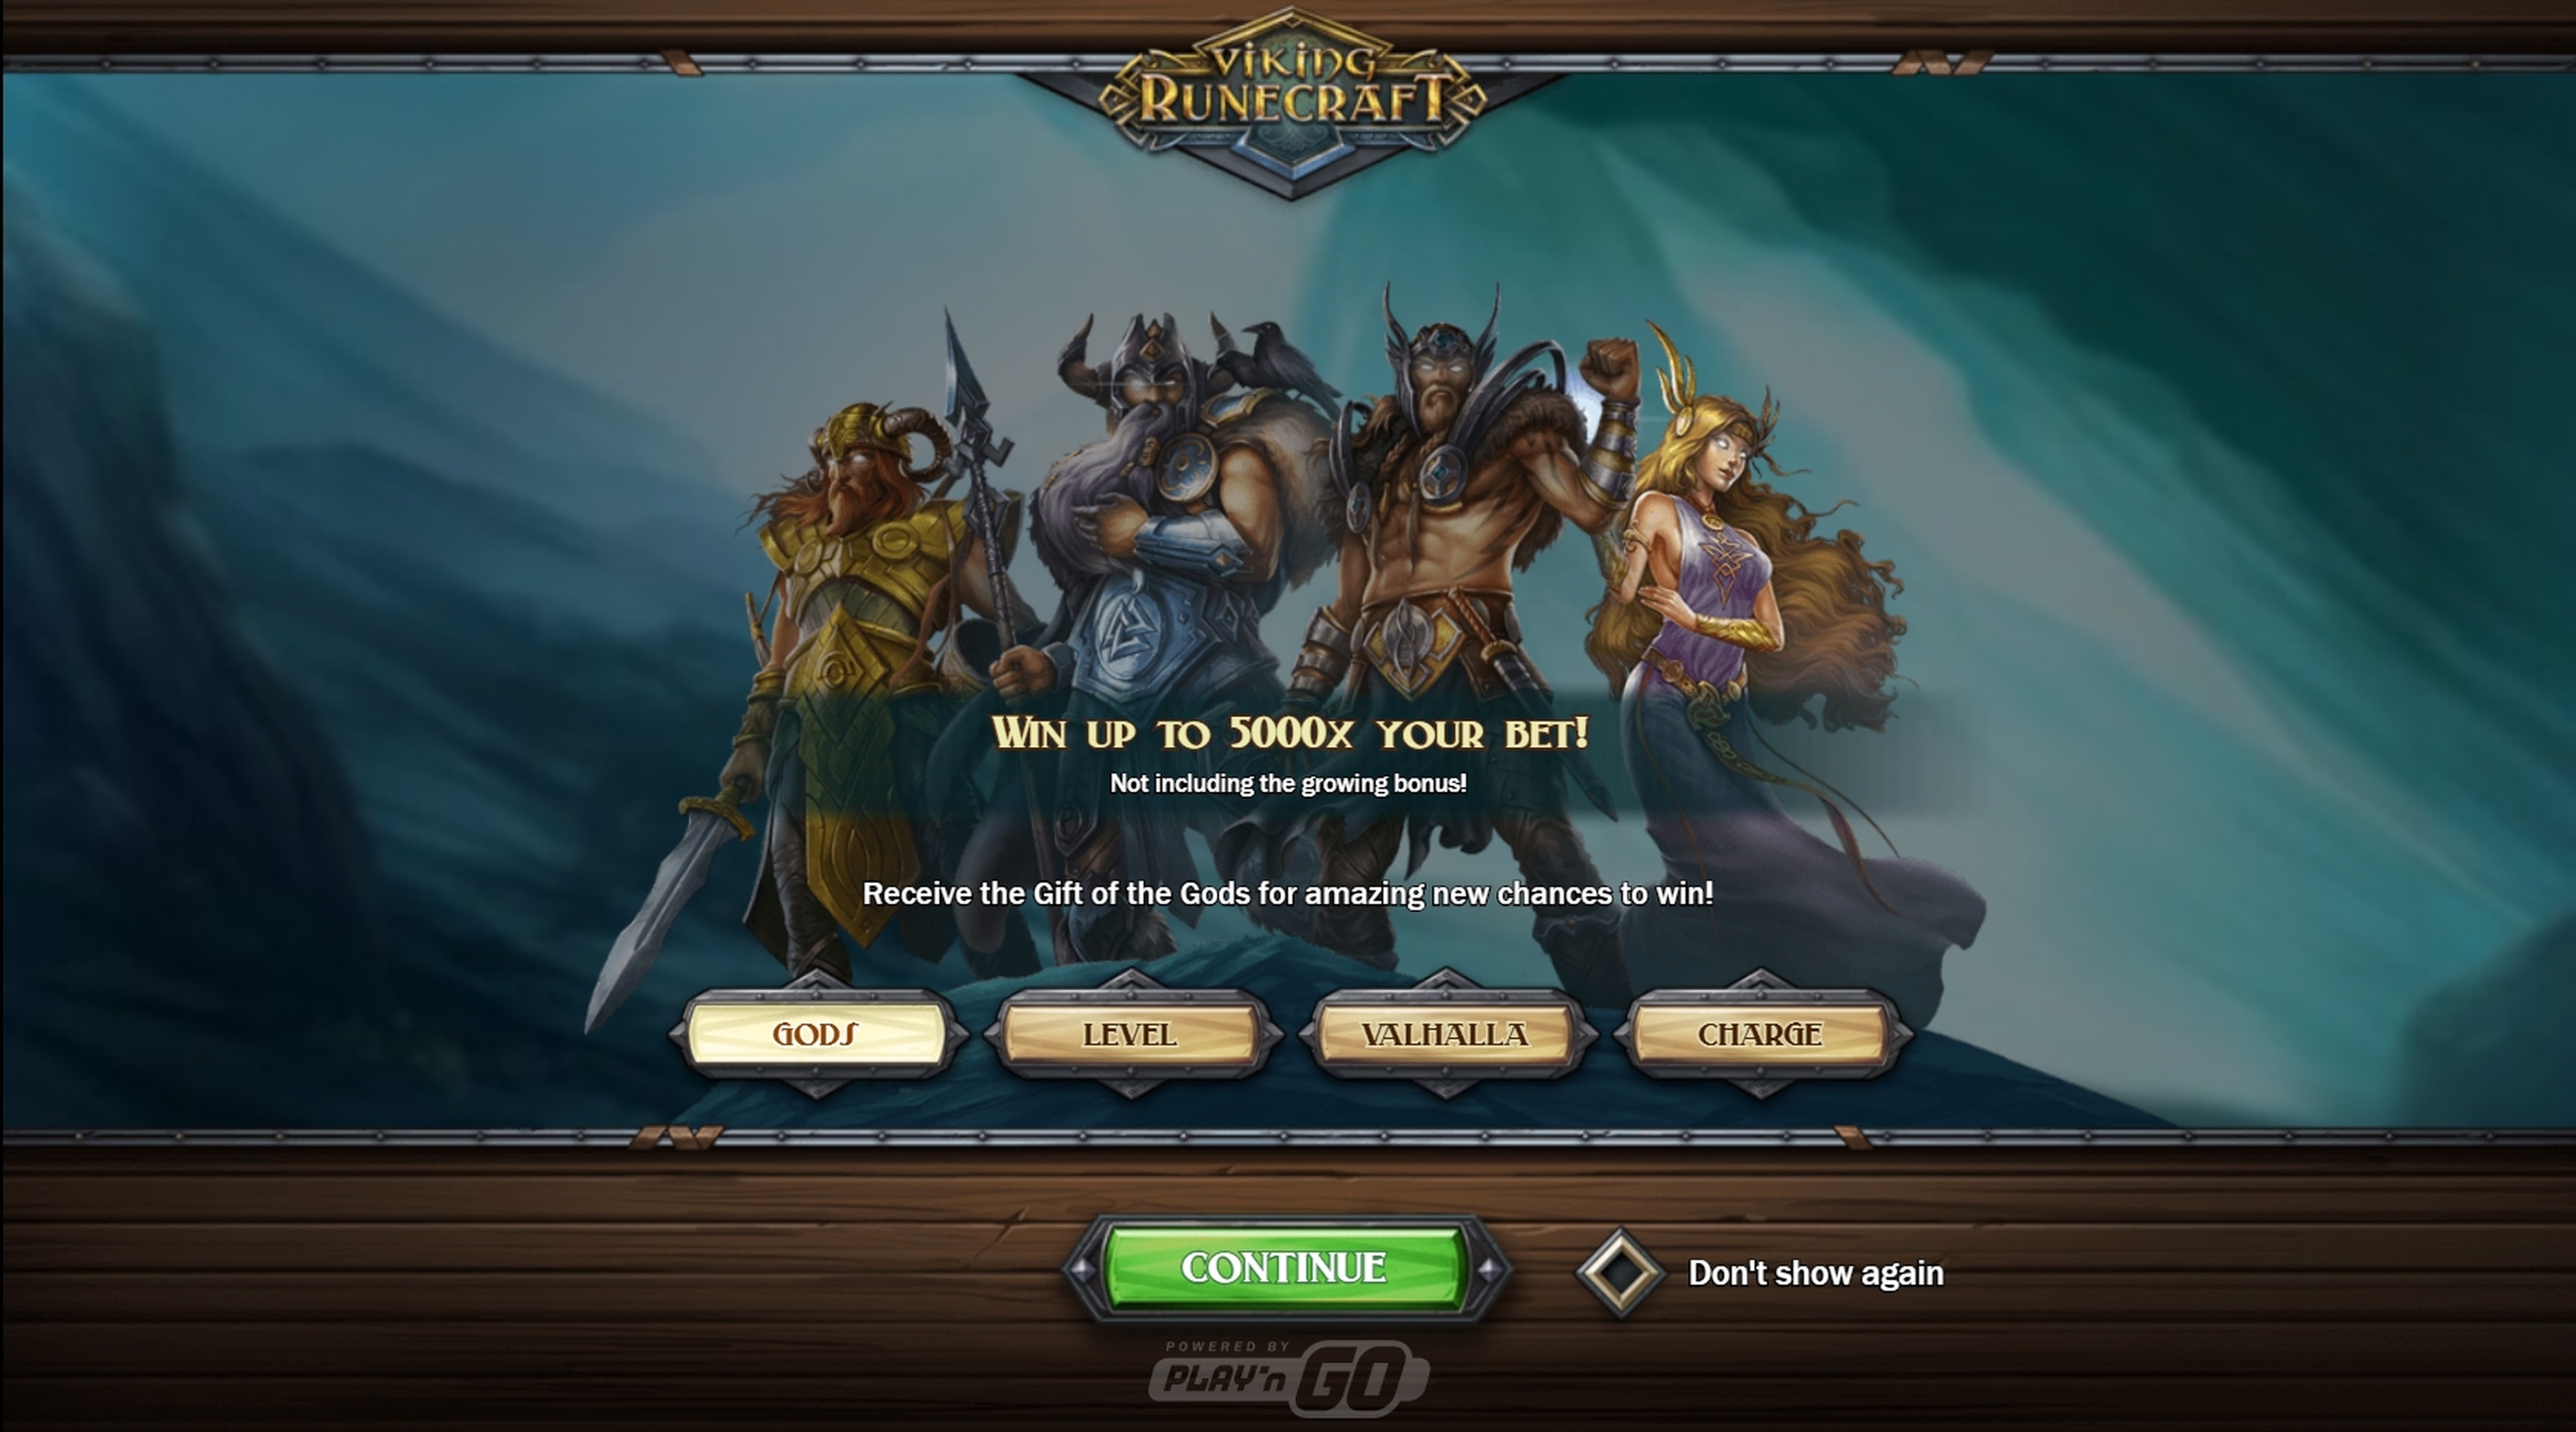 Play Viking Runecraft Free Casino Slot Game by Playn GO